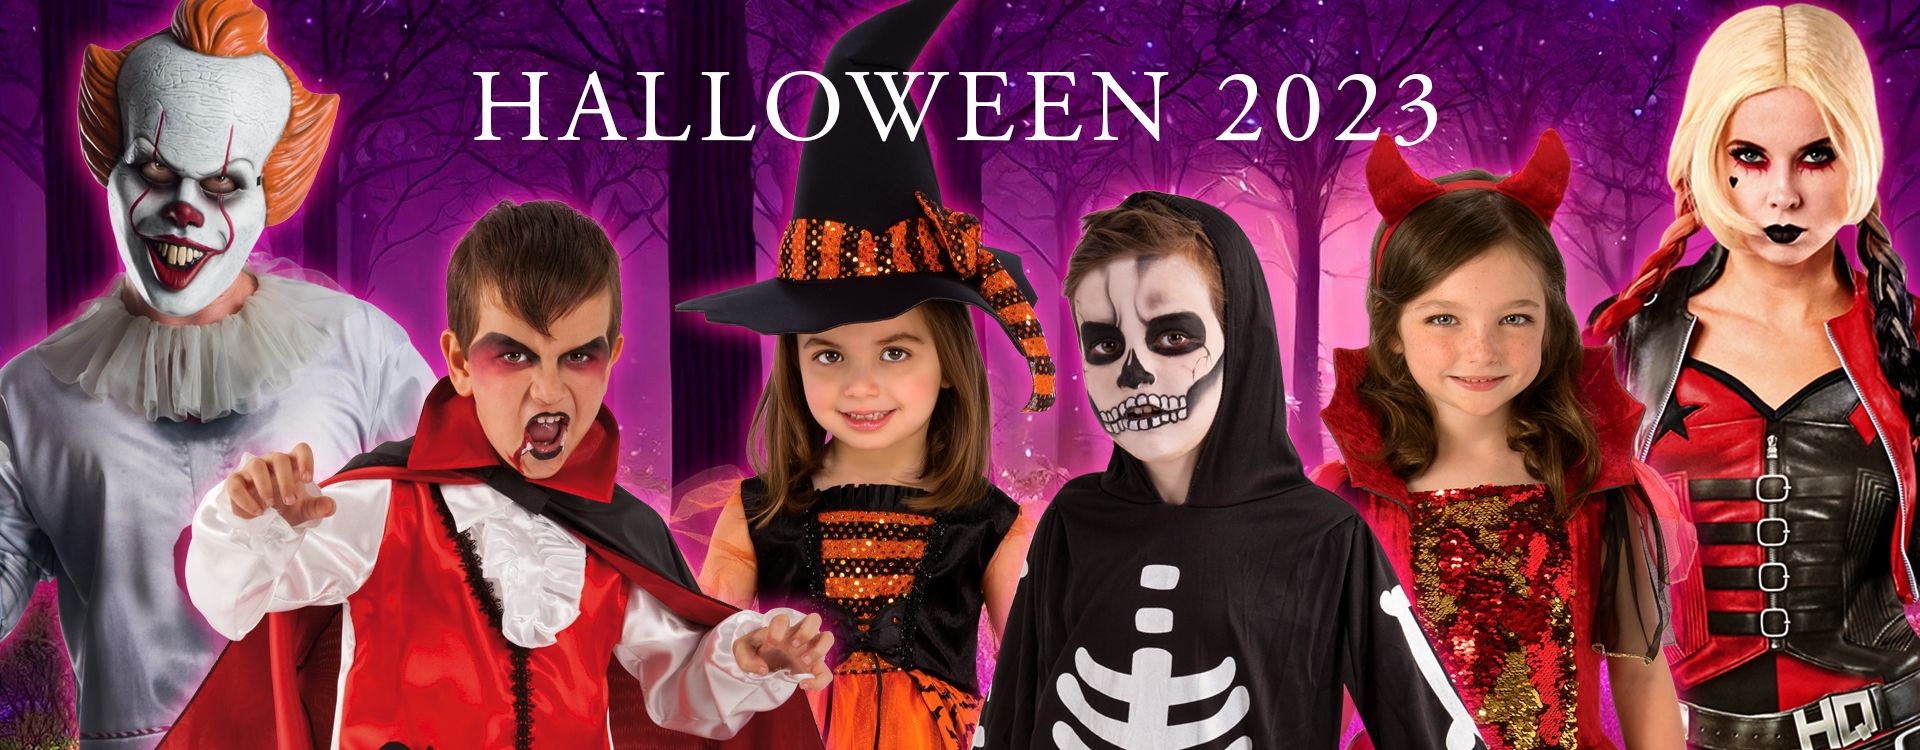 Rubies ofrece diferentes disfraces infantiles para disfrutar en Halloween